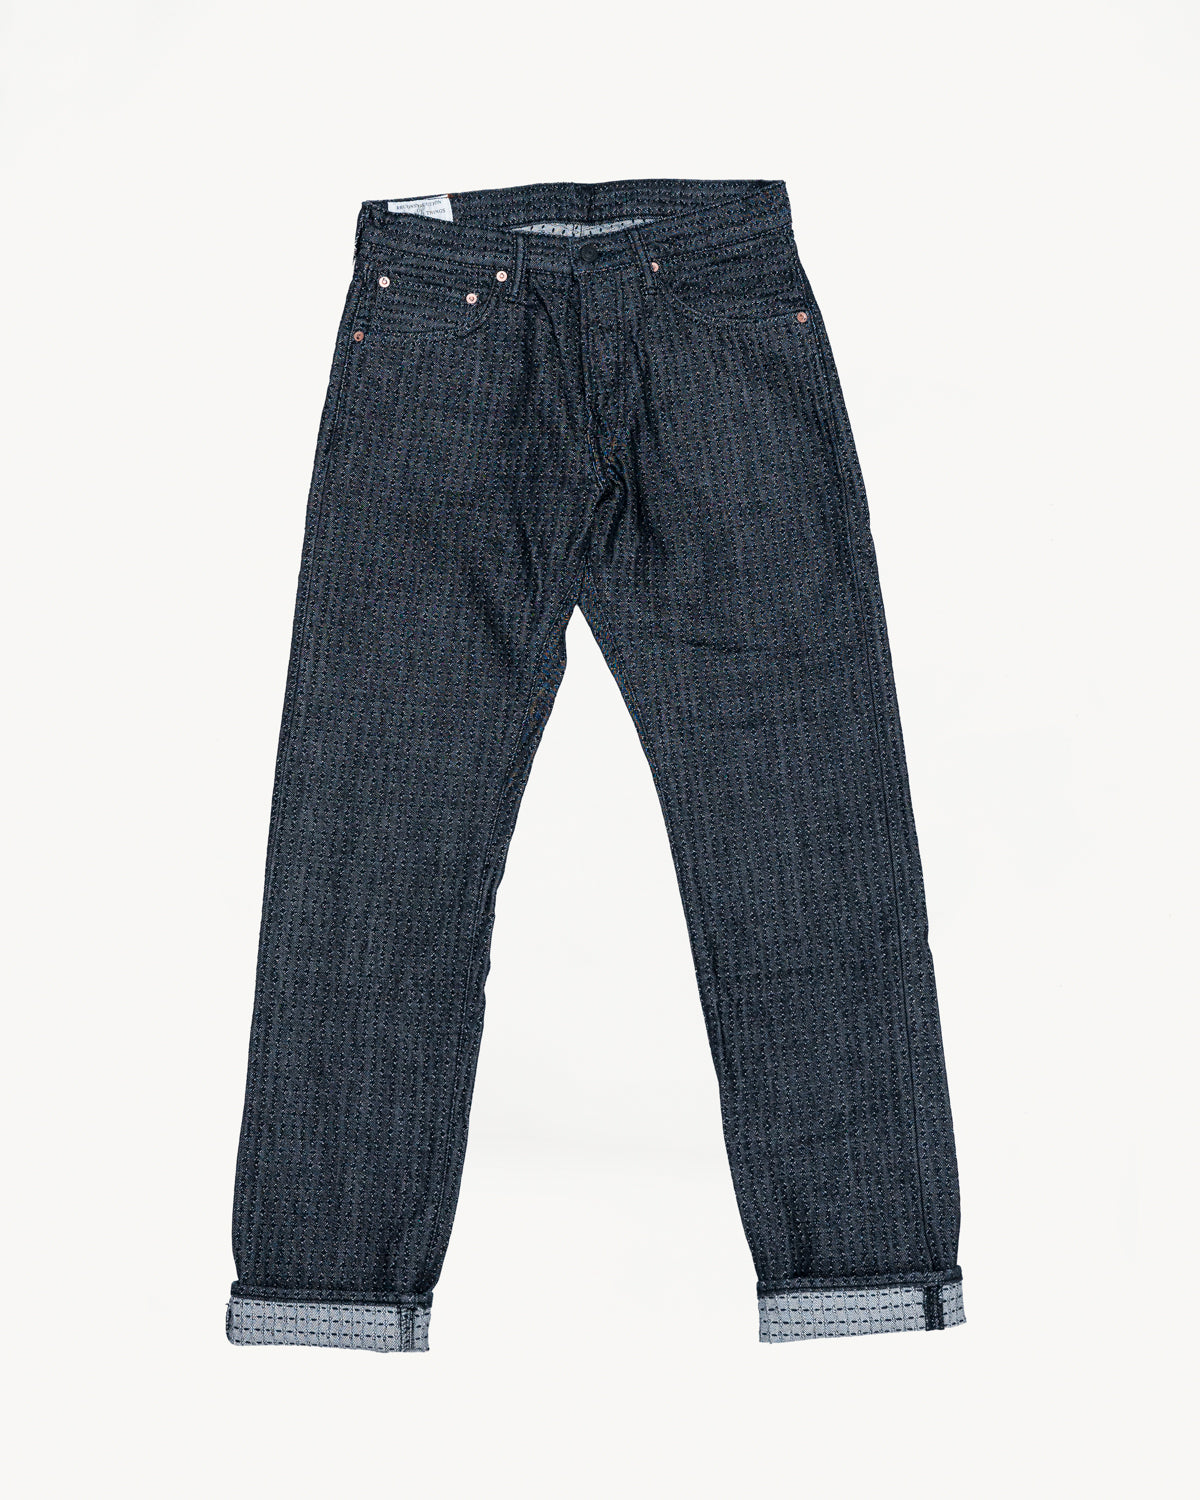 D1854S - 15.5oz Black O/W Sashiko Denim Jeans - Relaxed Taper